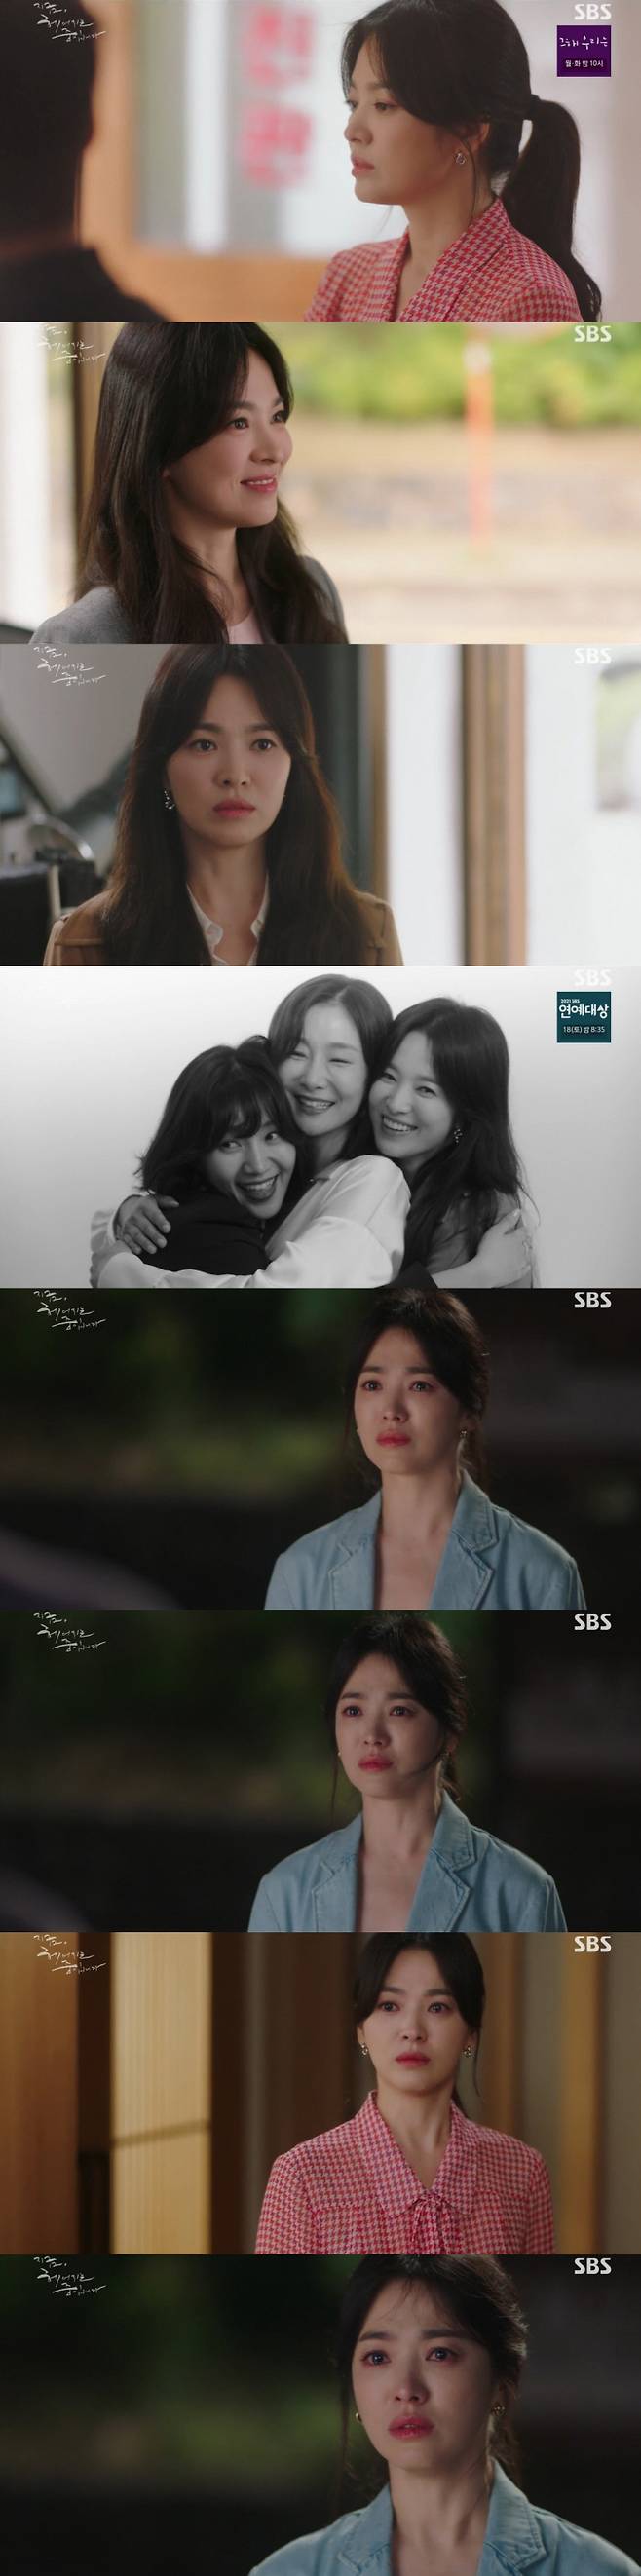 SBS 금토드라마 ‘지금, 헤어지는 중입니다’ 캡처